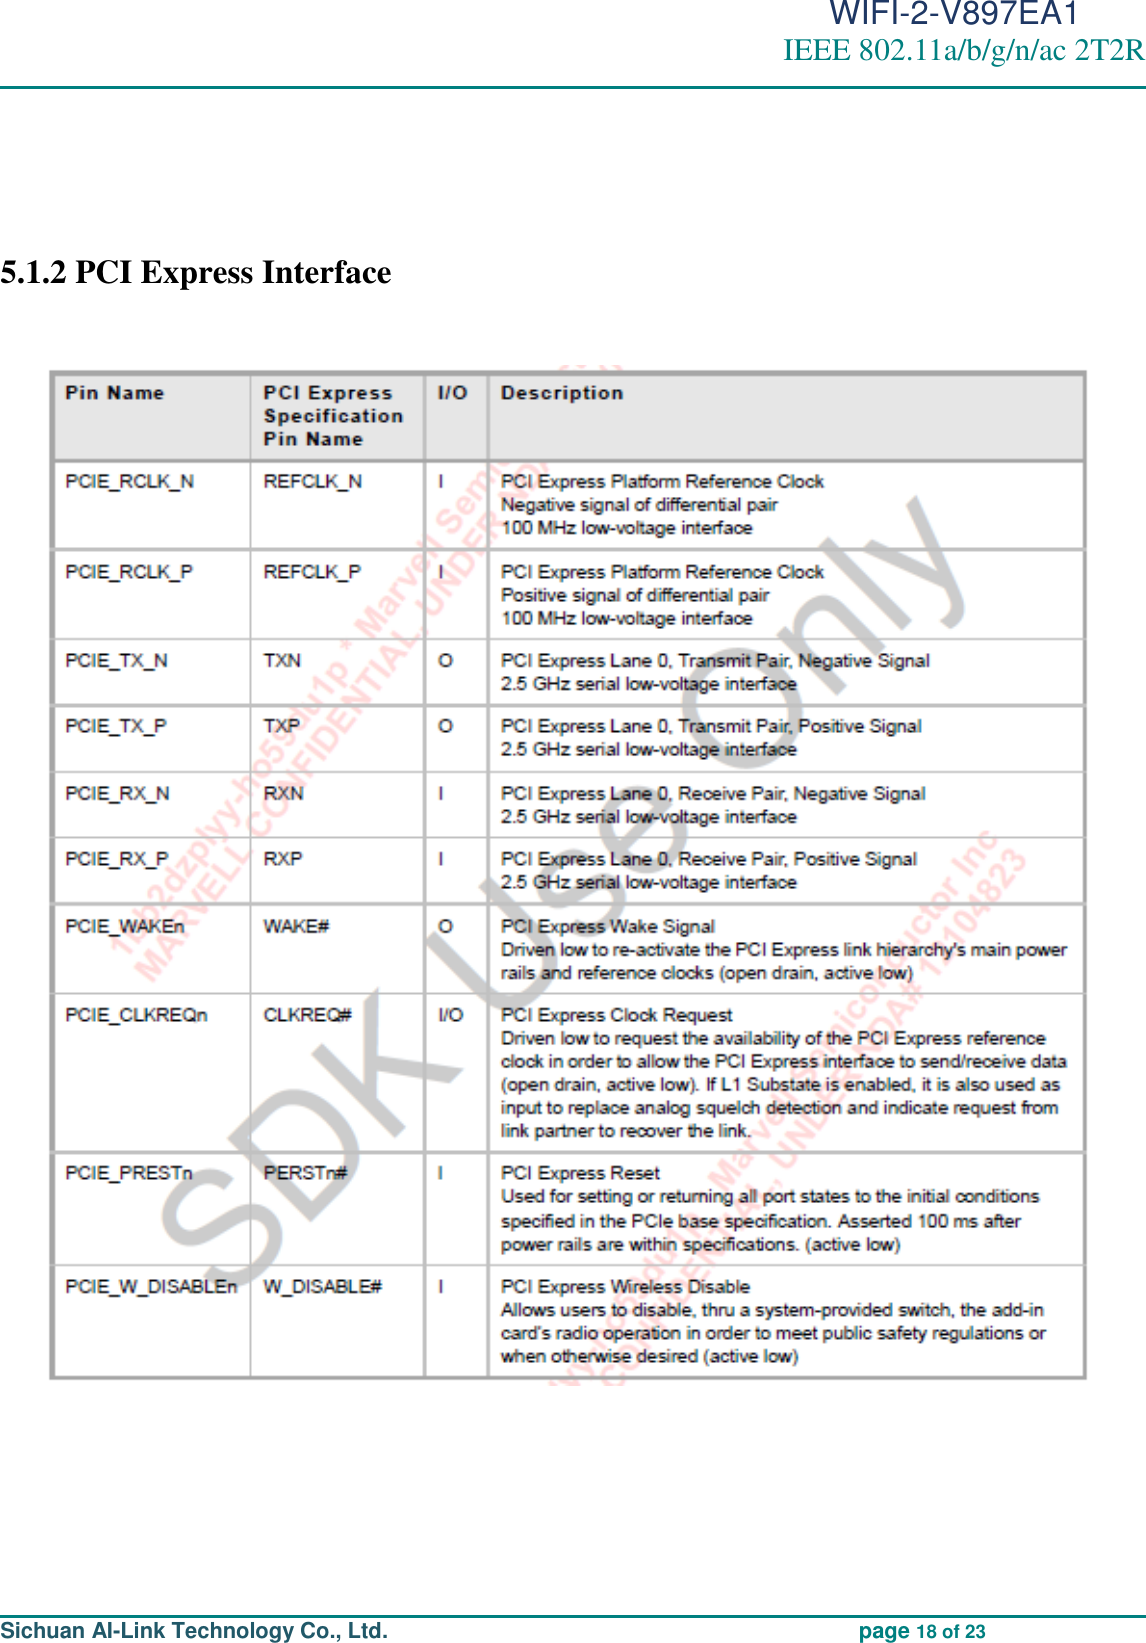                                                                                          WIFI-2-V897EA1 IEEE 802.11a/b/g/n/ac 2T2R                                                                                                                                                                                                                                                                                                                                                                                                                     Sichuan AI-Link Technology Co., Ltd.                                             page 18 of 23     5.1.2 PCI Express Interface        